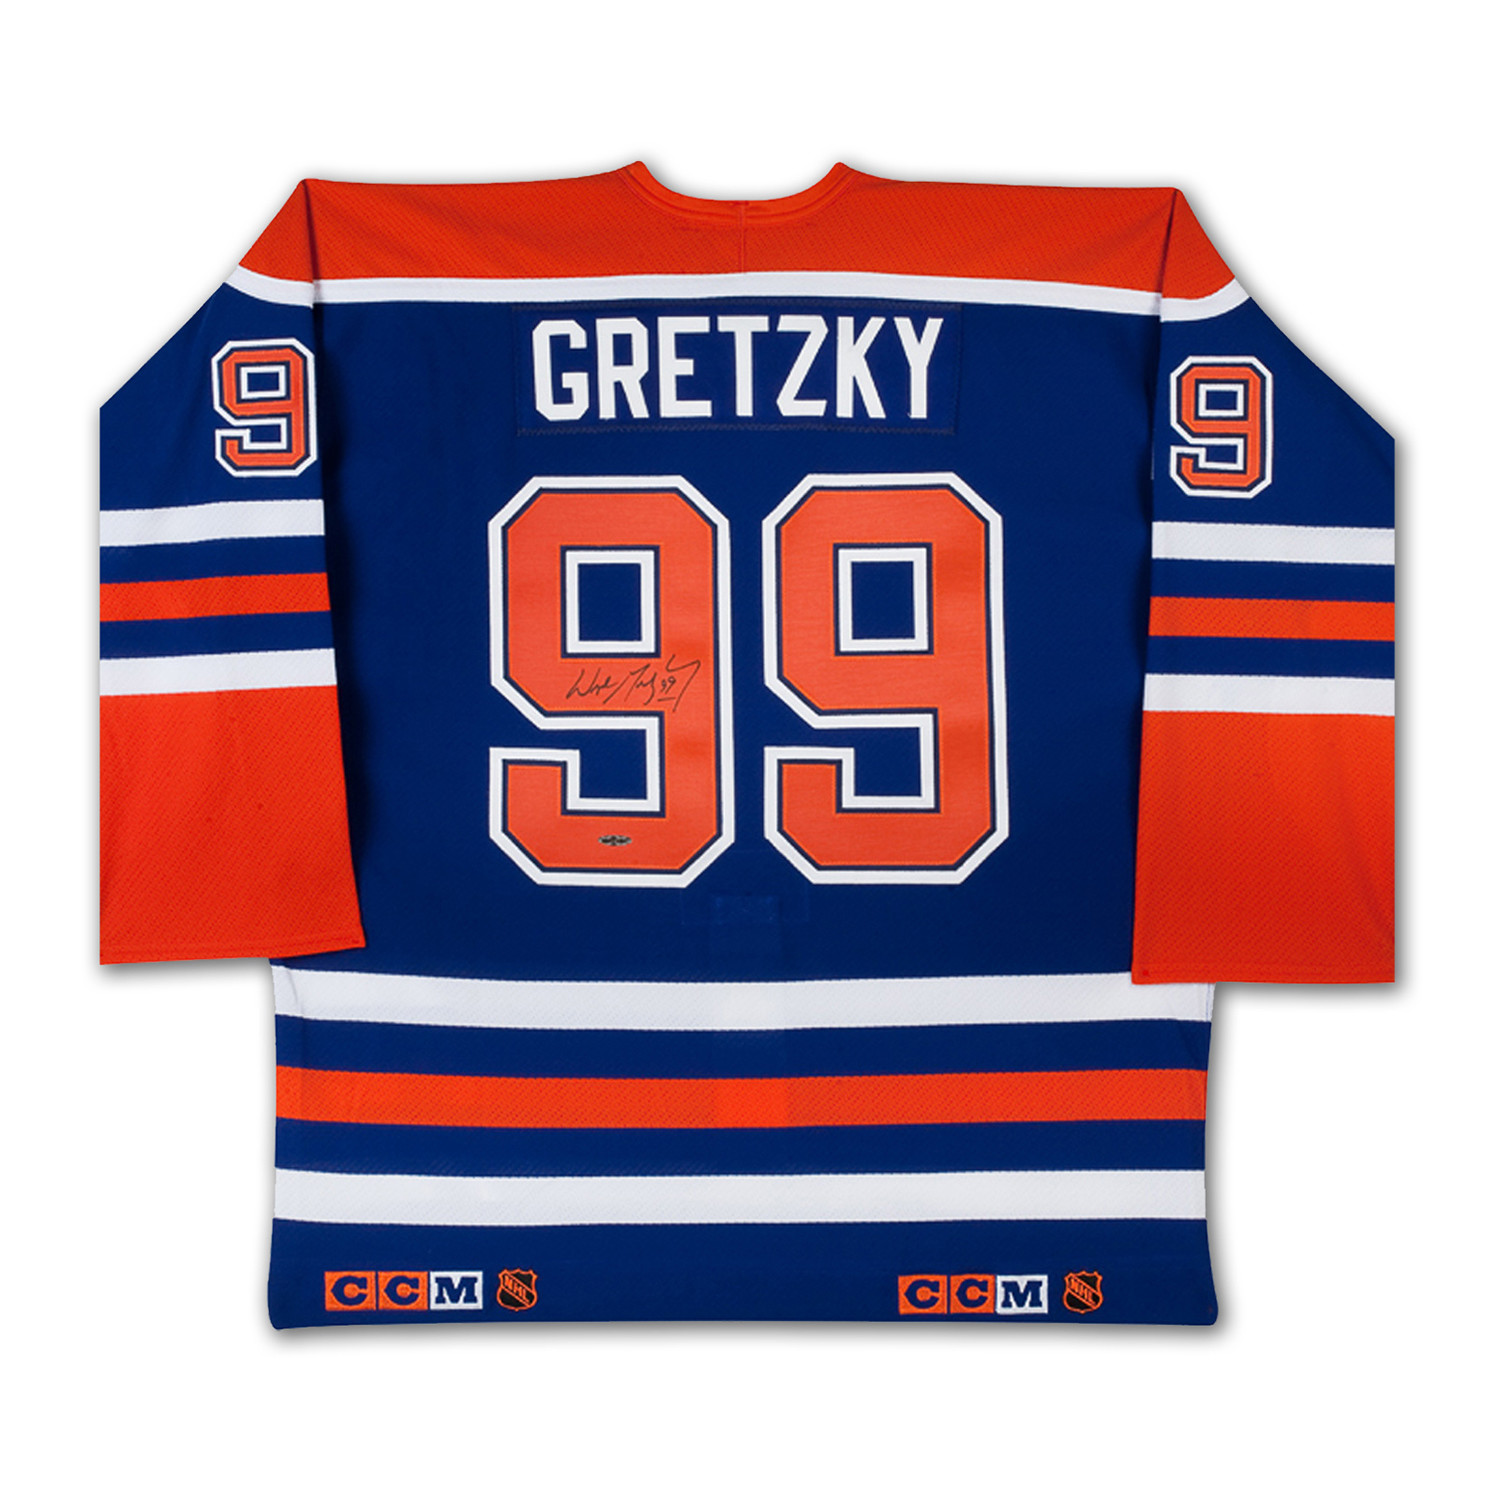 Wayne Gretzky Autographed Framed Oilers Jersey